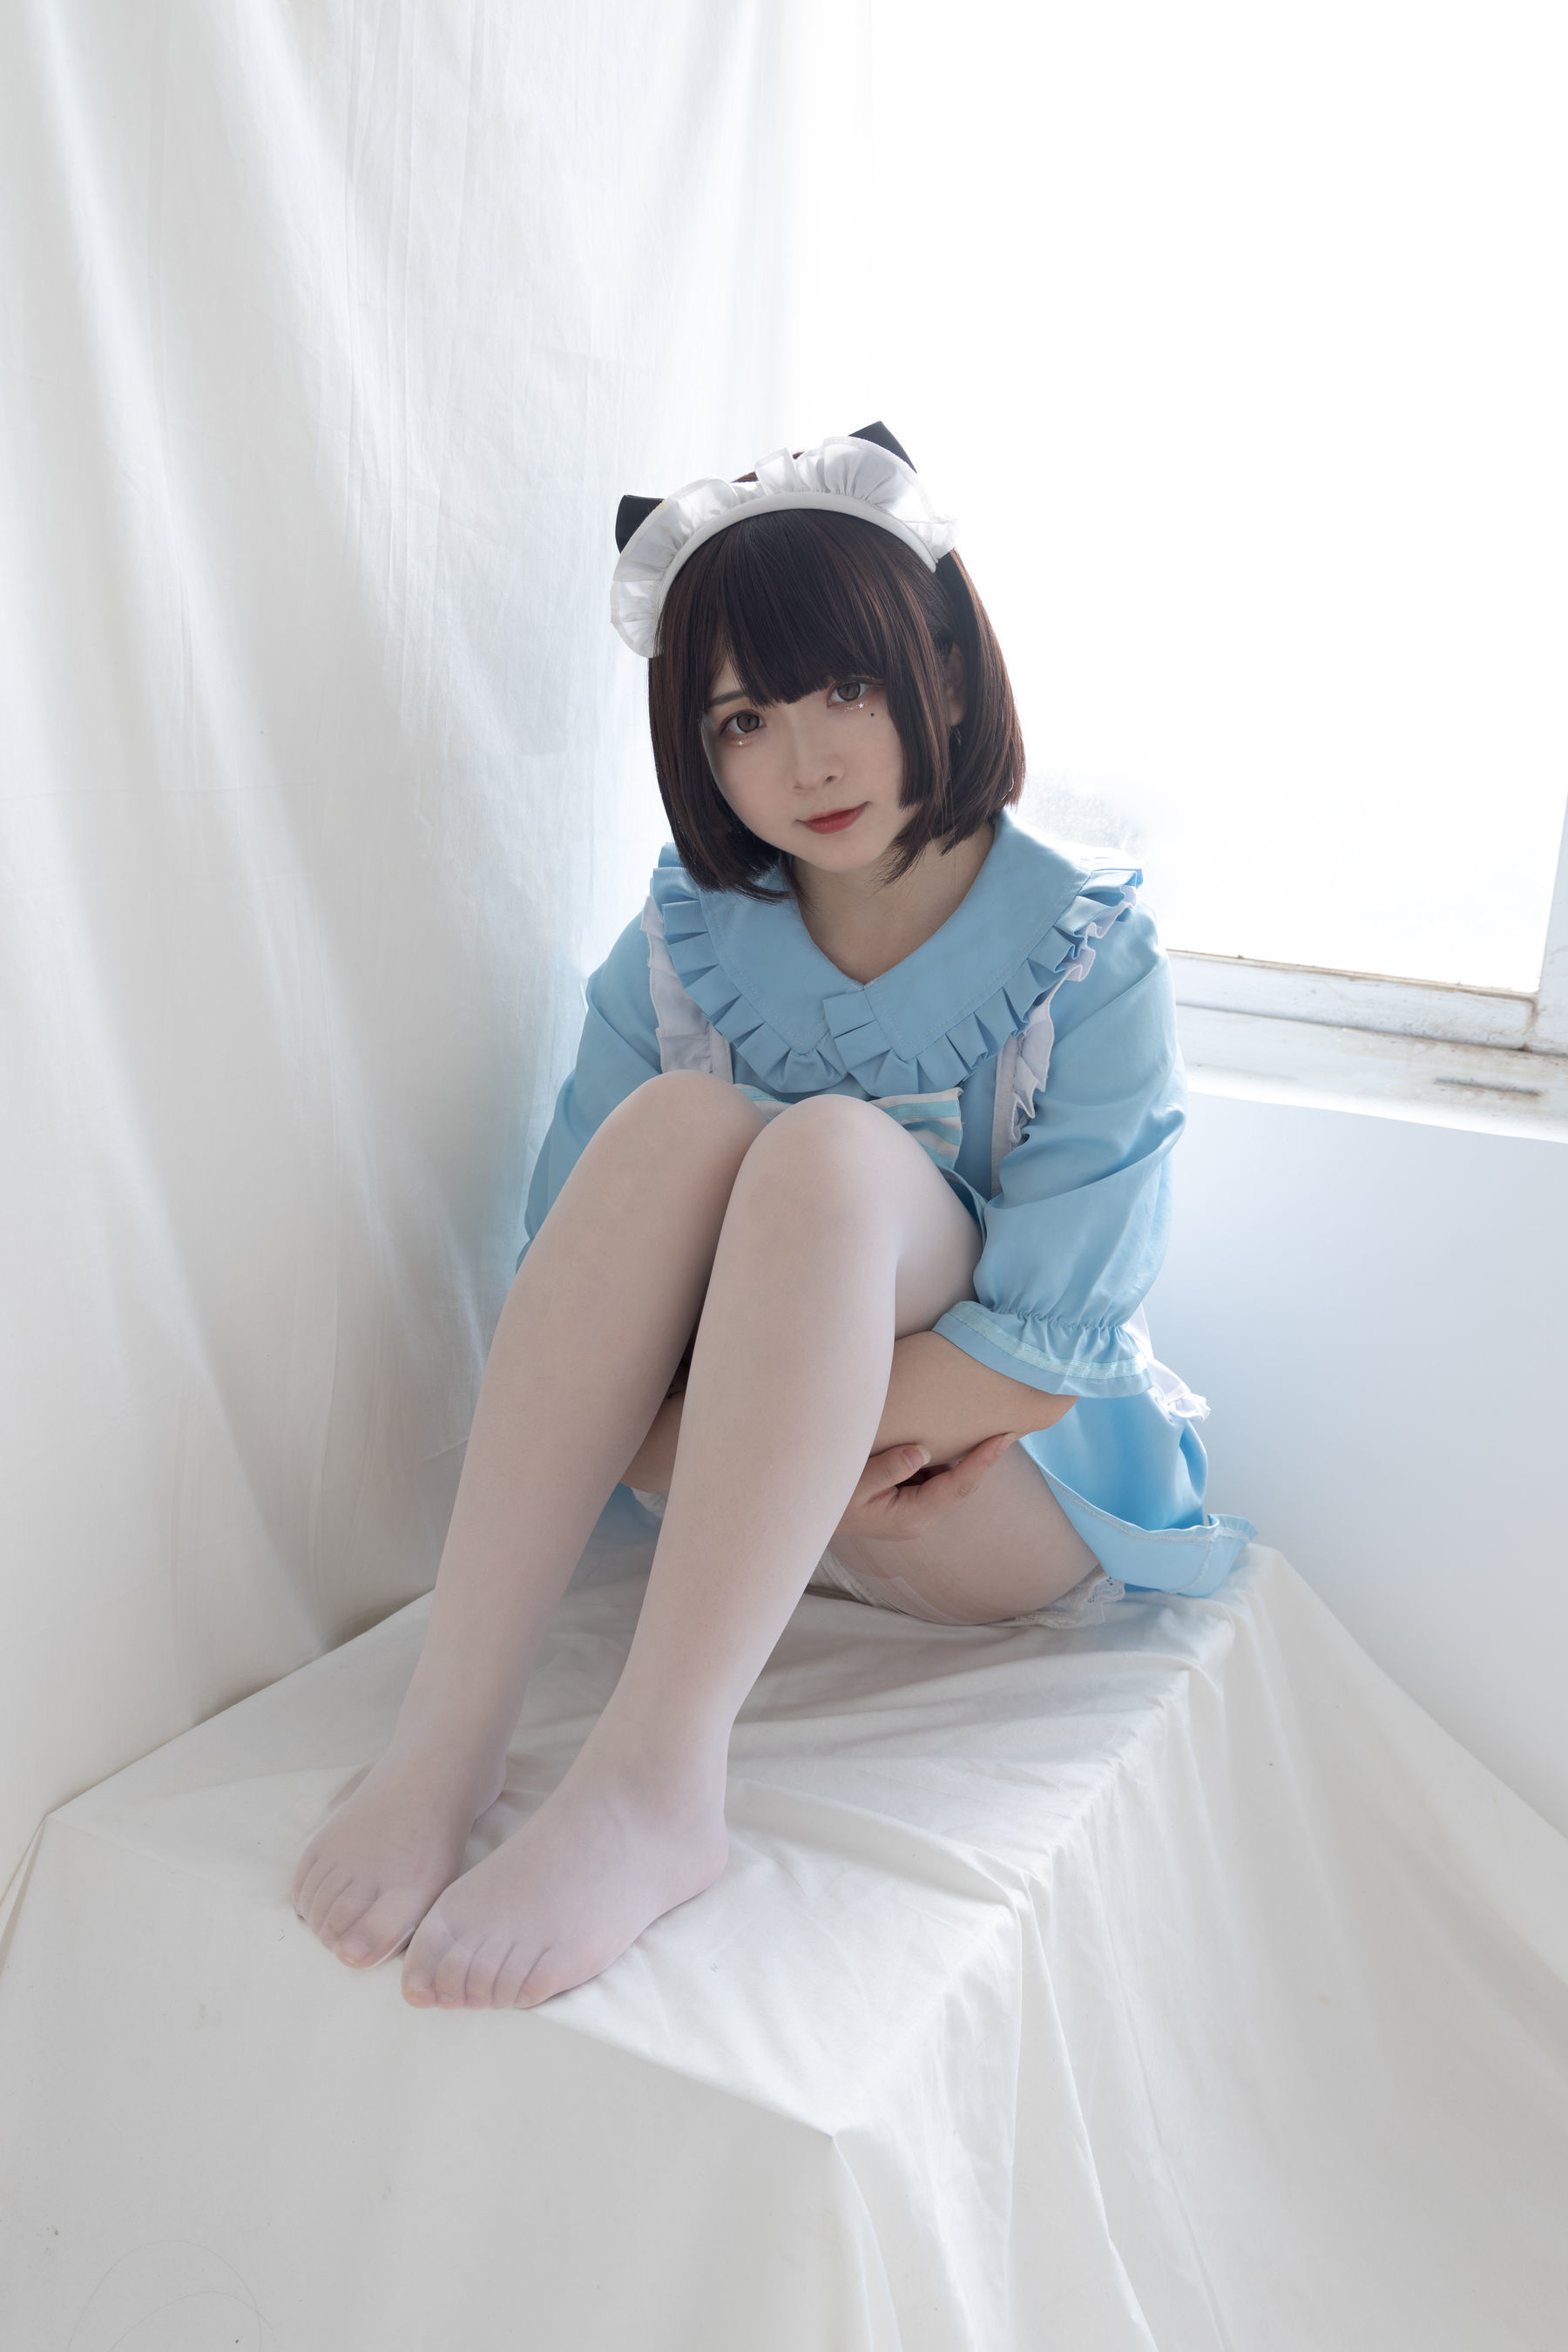 View - [COS福利] 二次元美女古川kagura - 蓝色小猫女仆 - 图库库